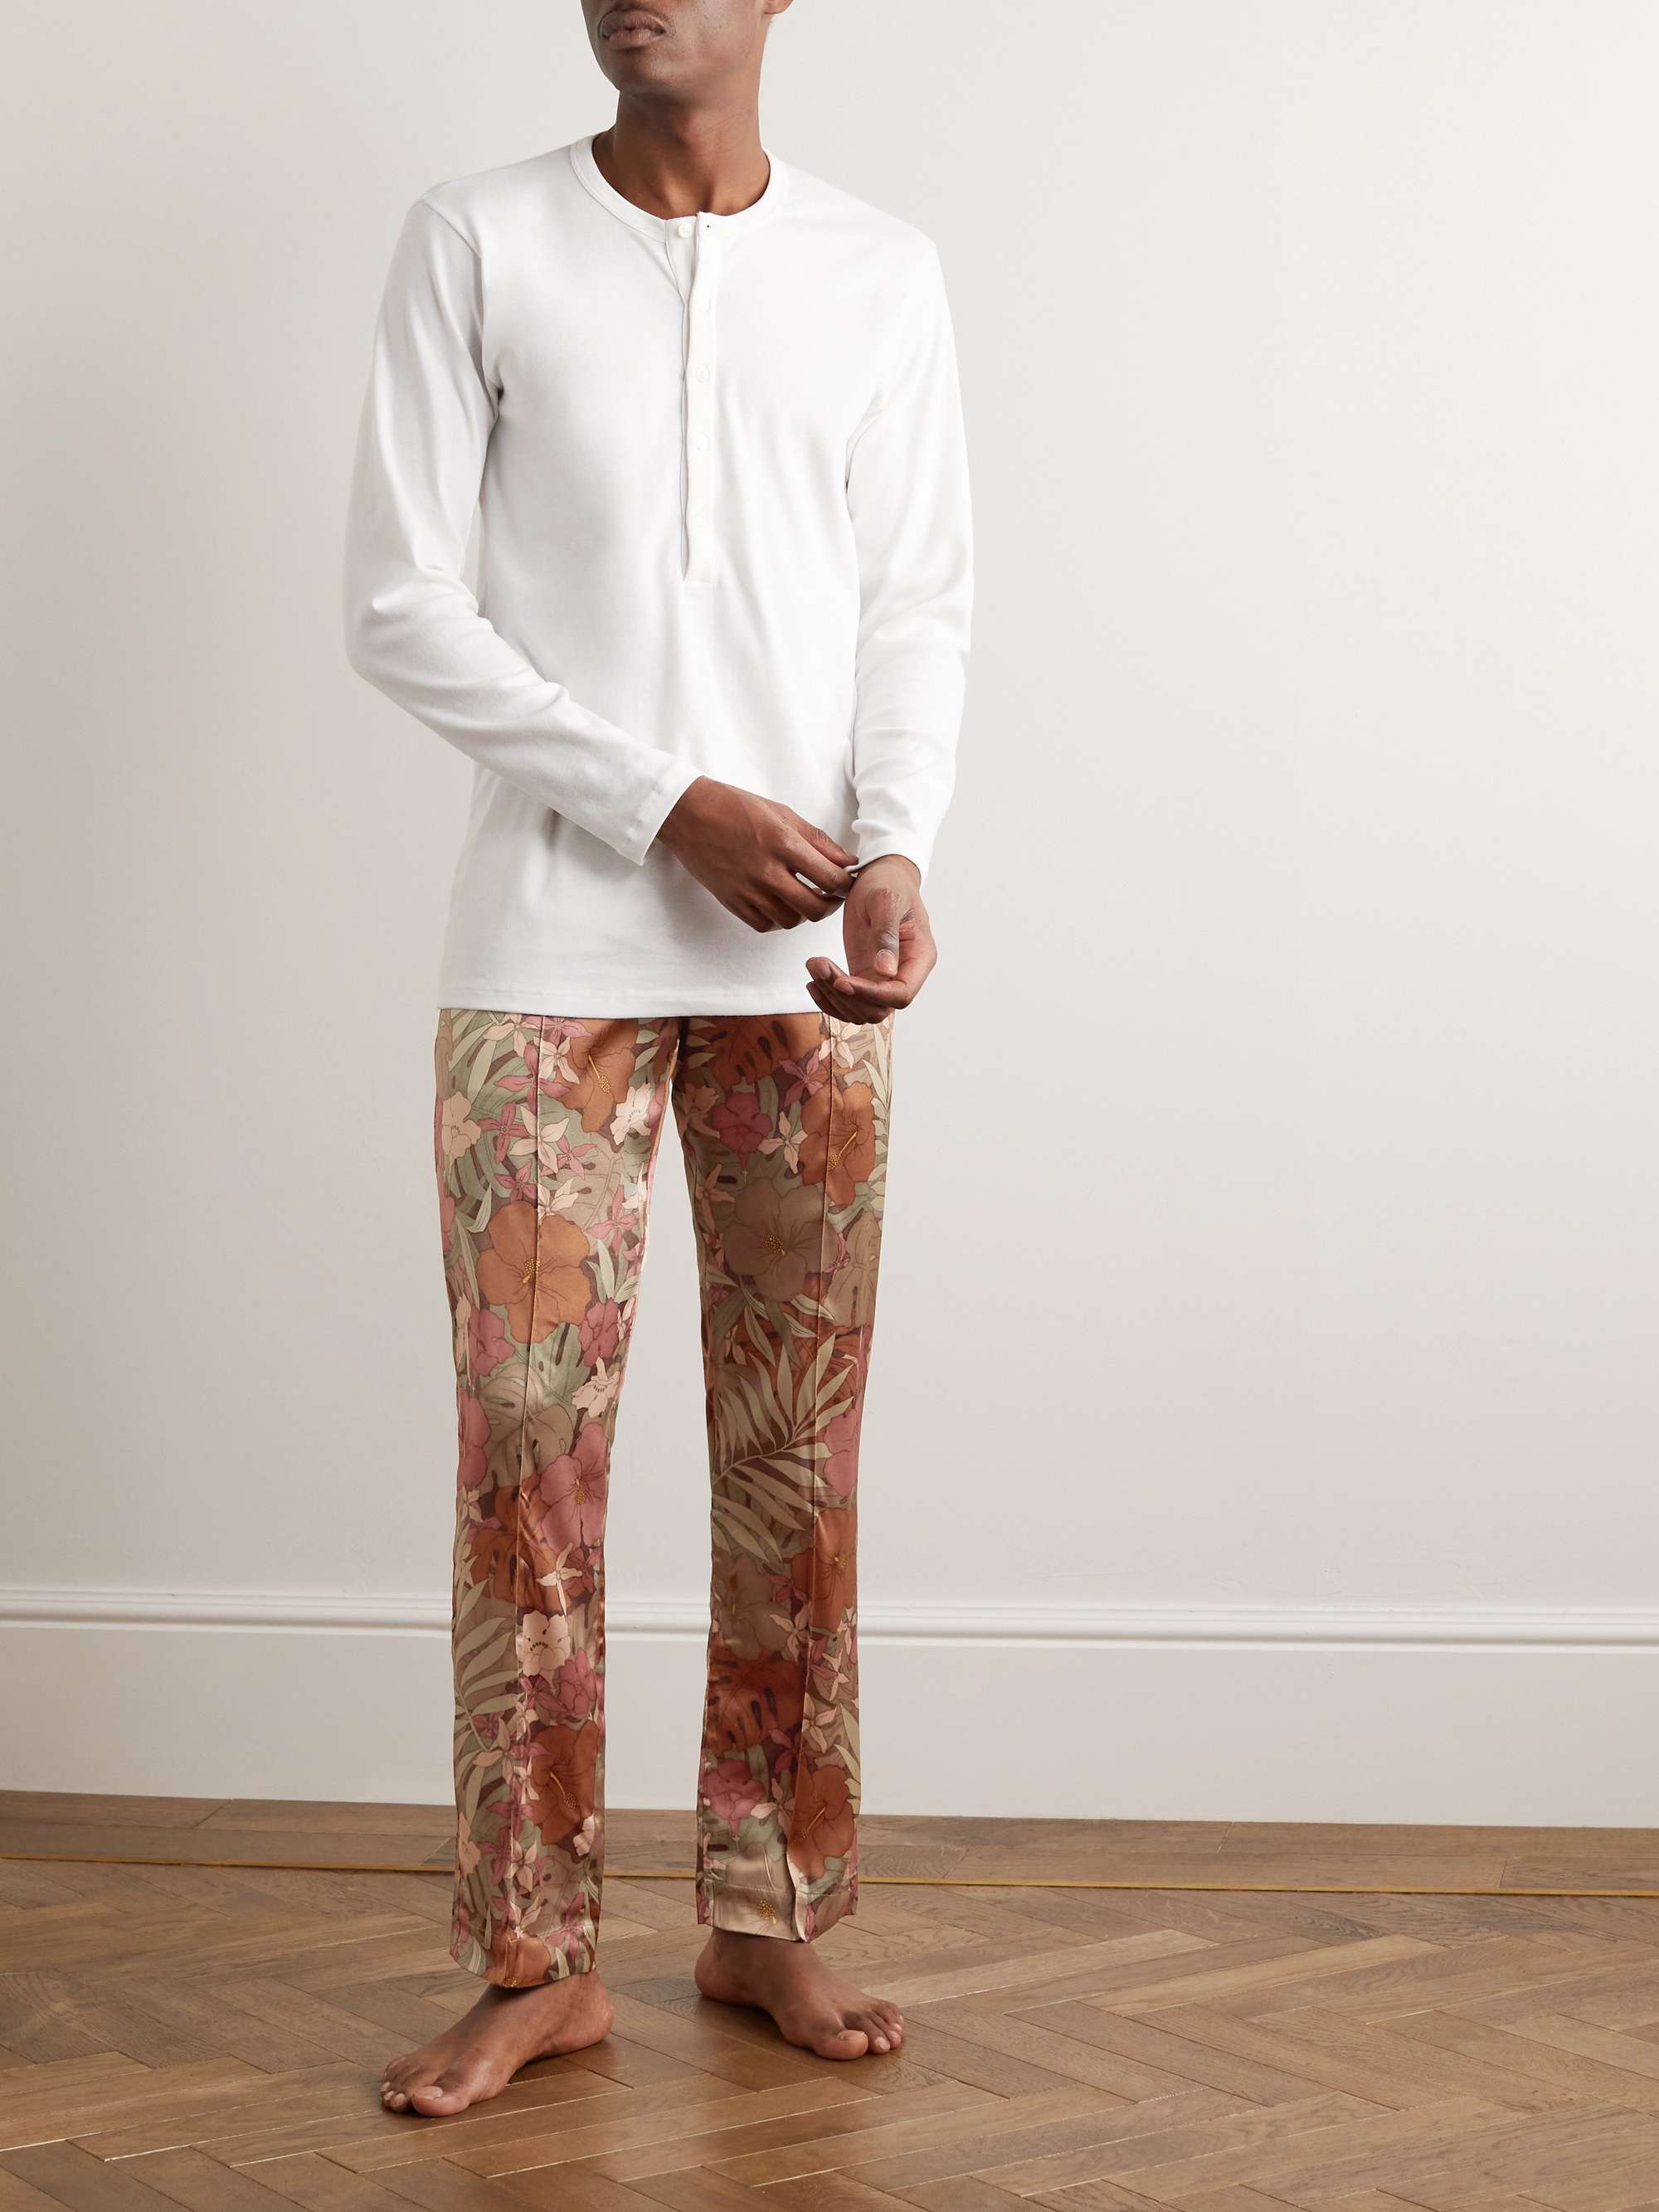 TOM FORD Velvet-Trimmed Floral-Print Stretch-Silk Satin Pyjama Trousers